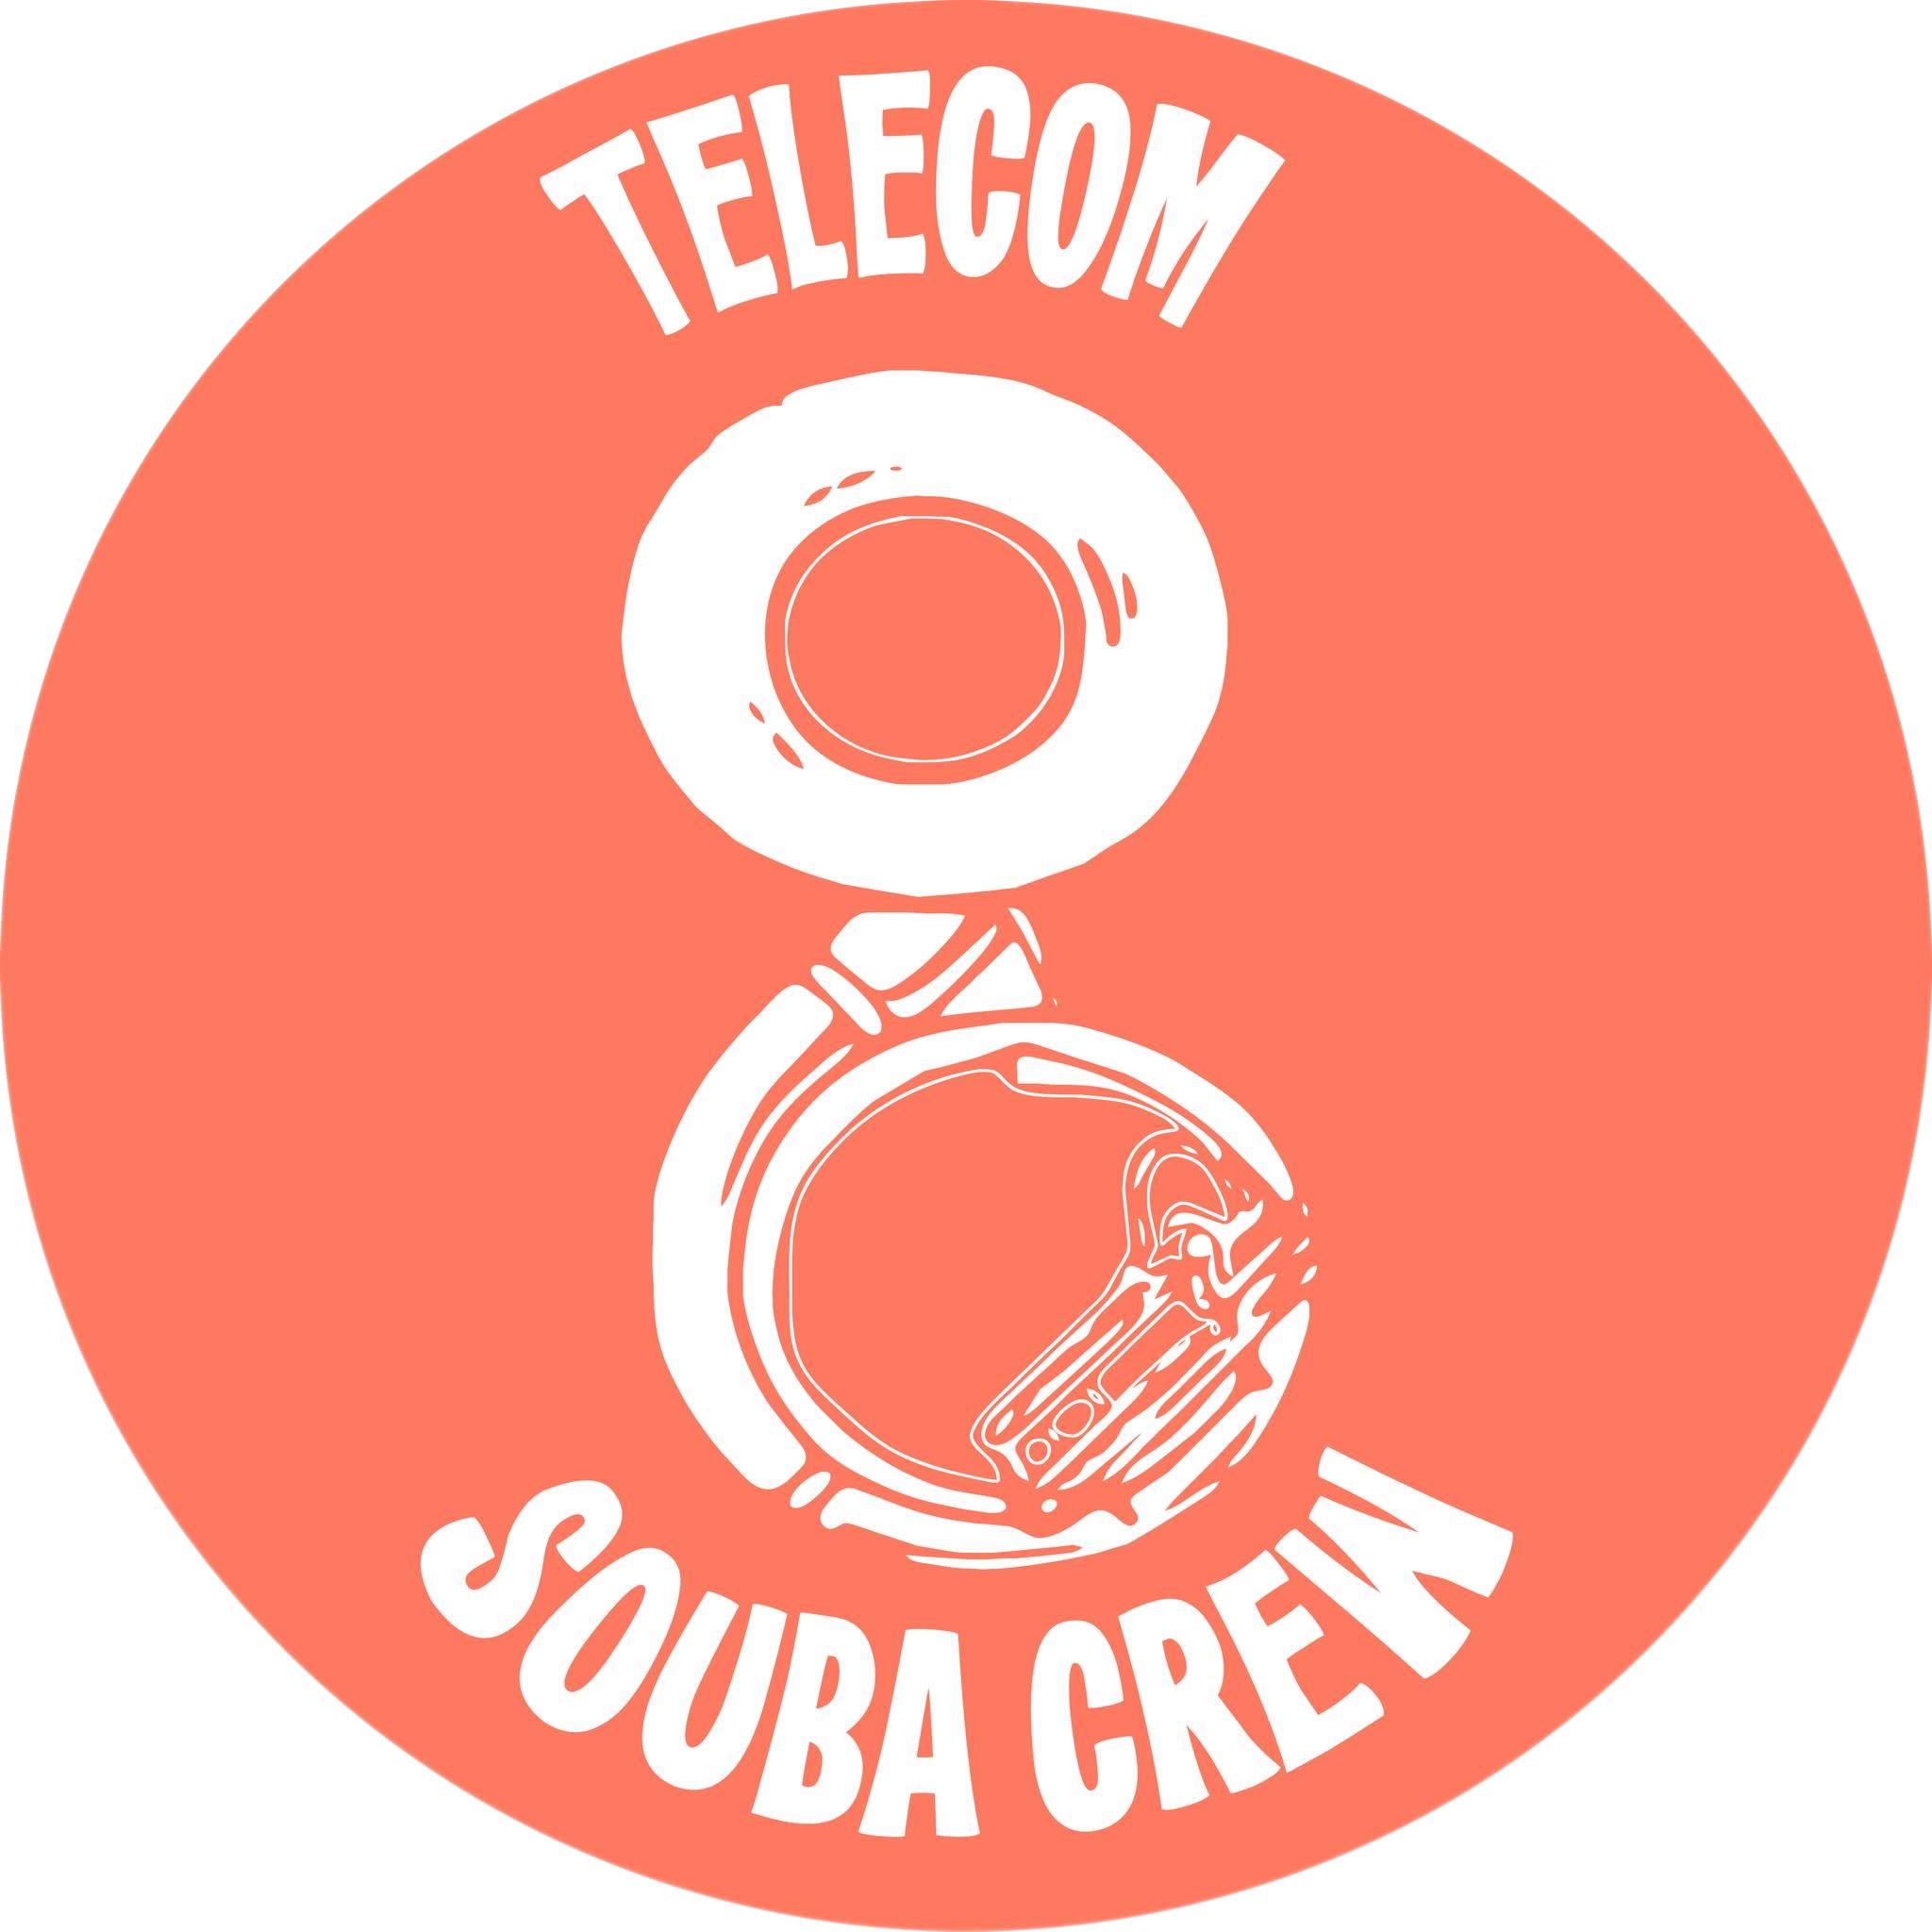 telecom_souba_crew_transparent.png